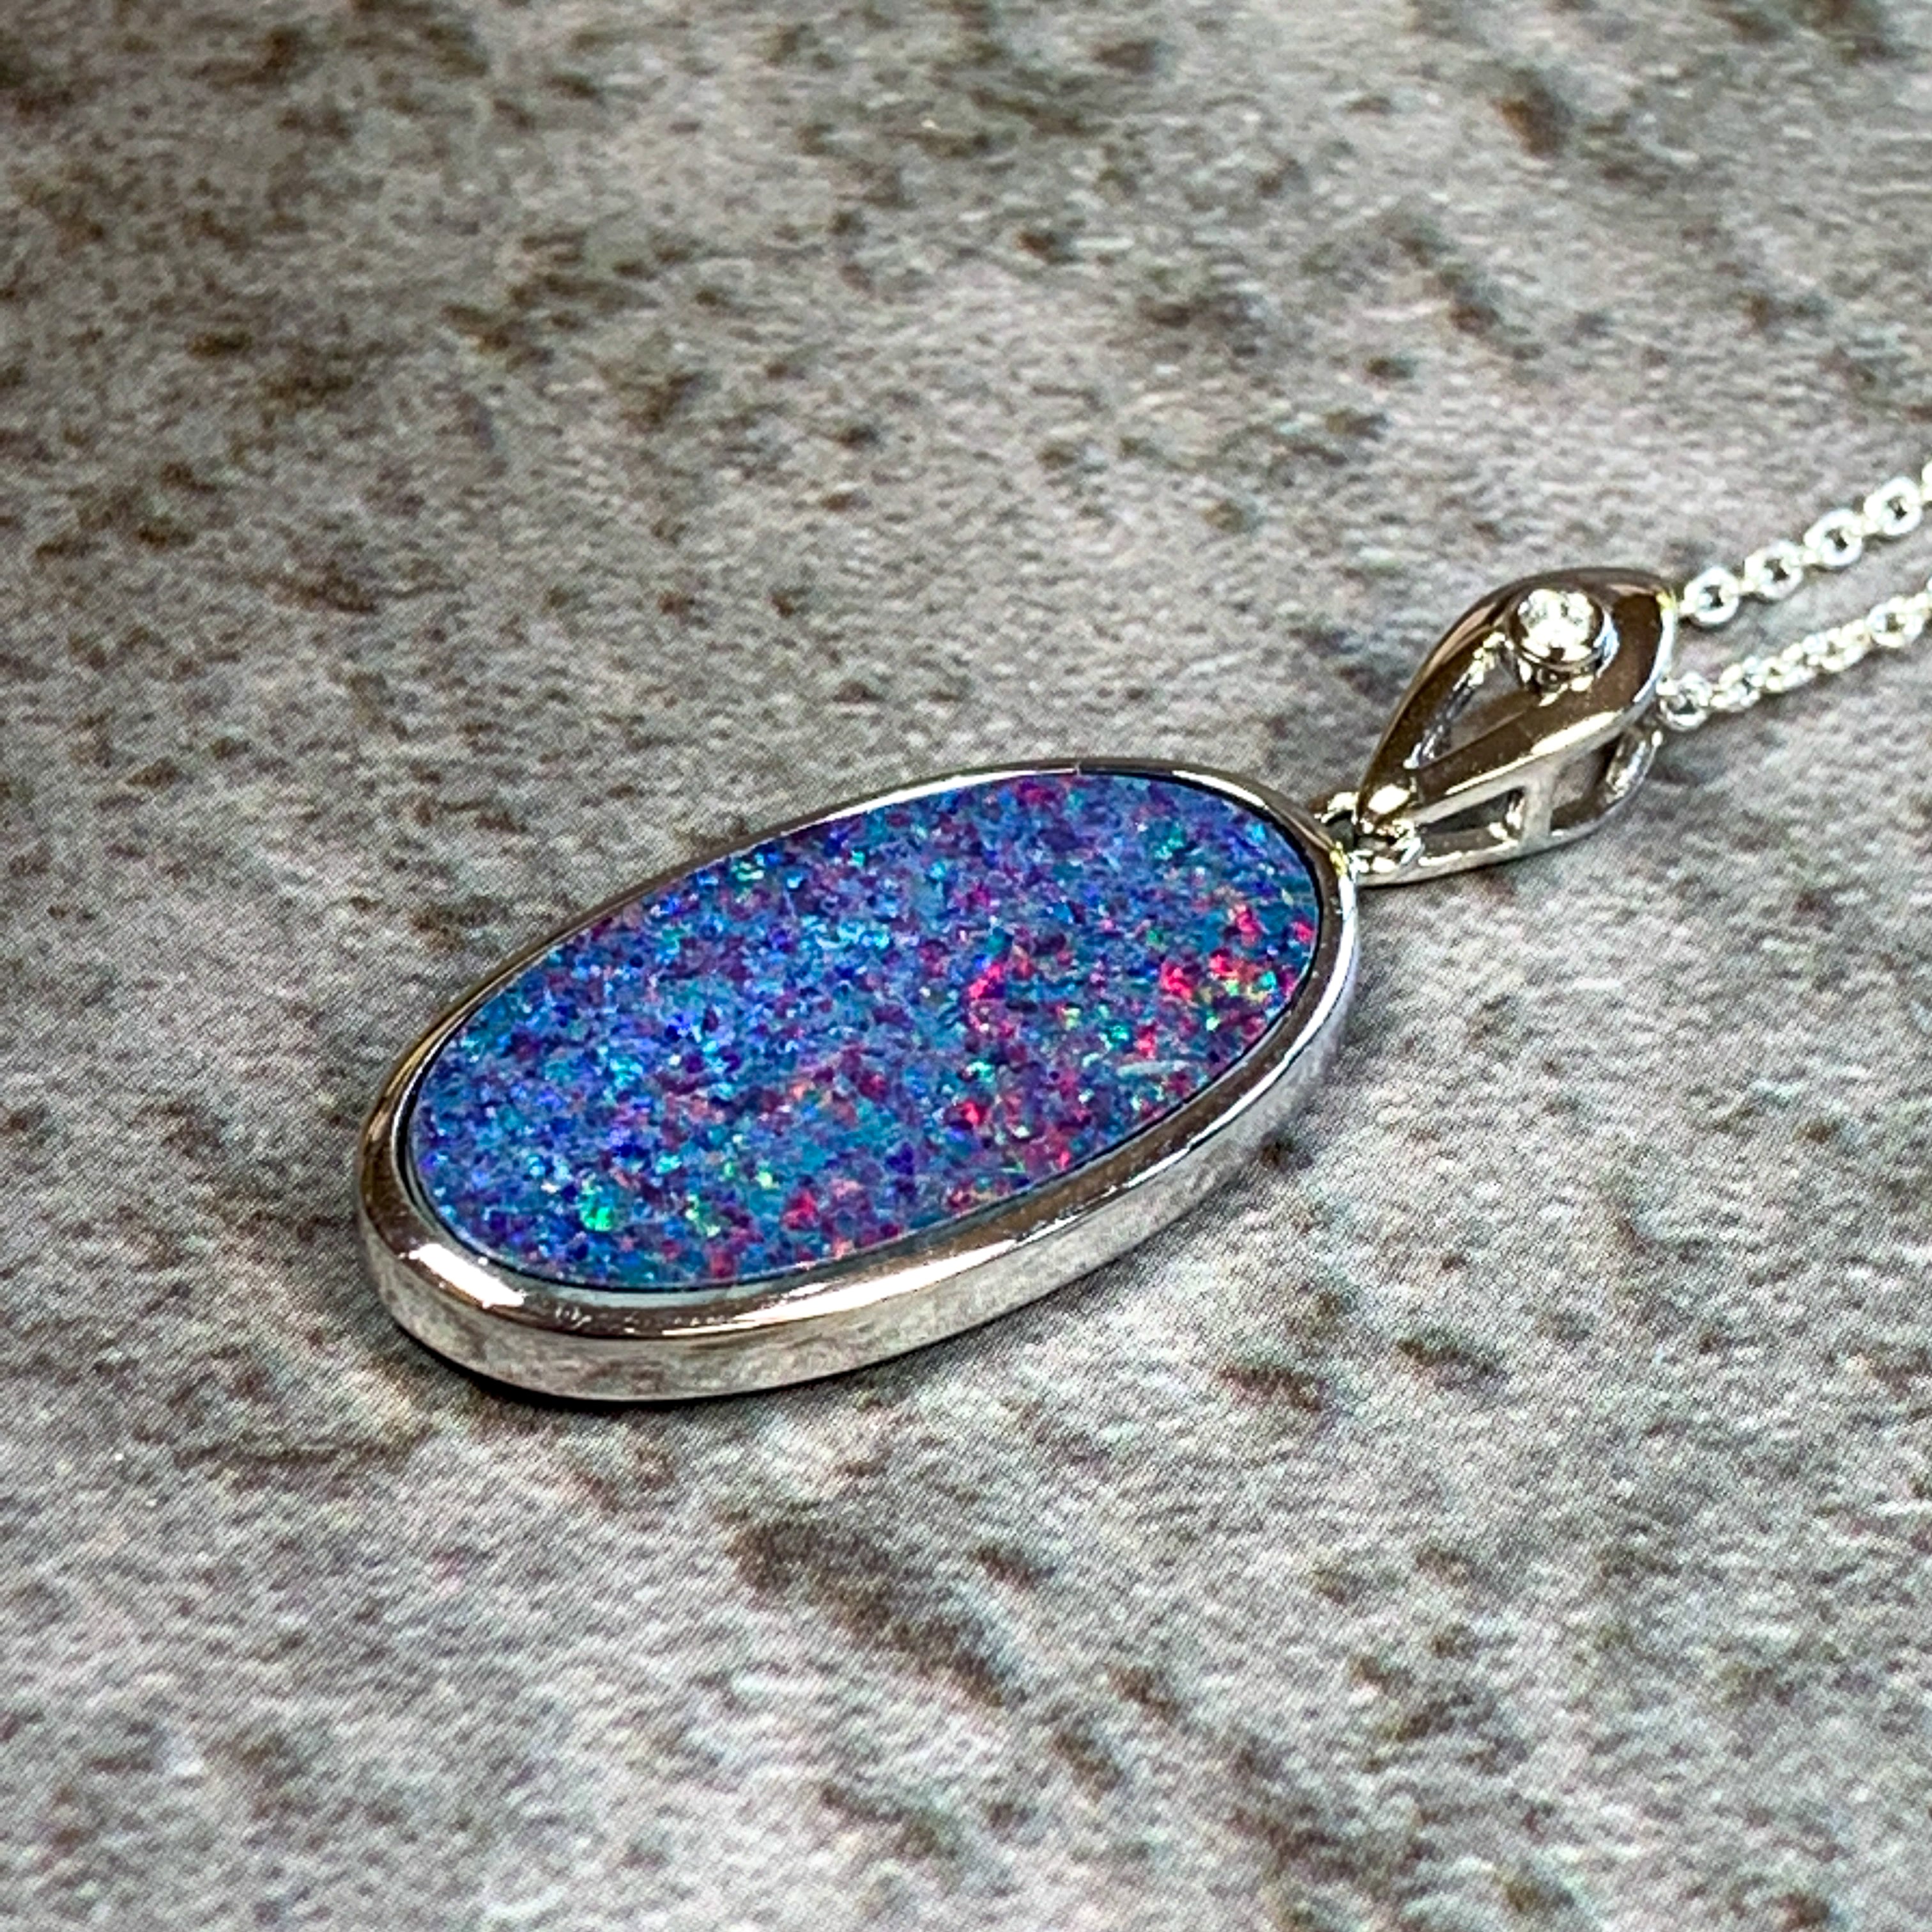 Sterling Silver Red Violet Blue Oval Opal pendant - Masterpiece Jewellery Opal & Gems Sydney Australia | Online Shop